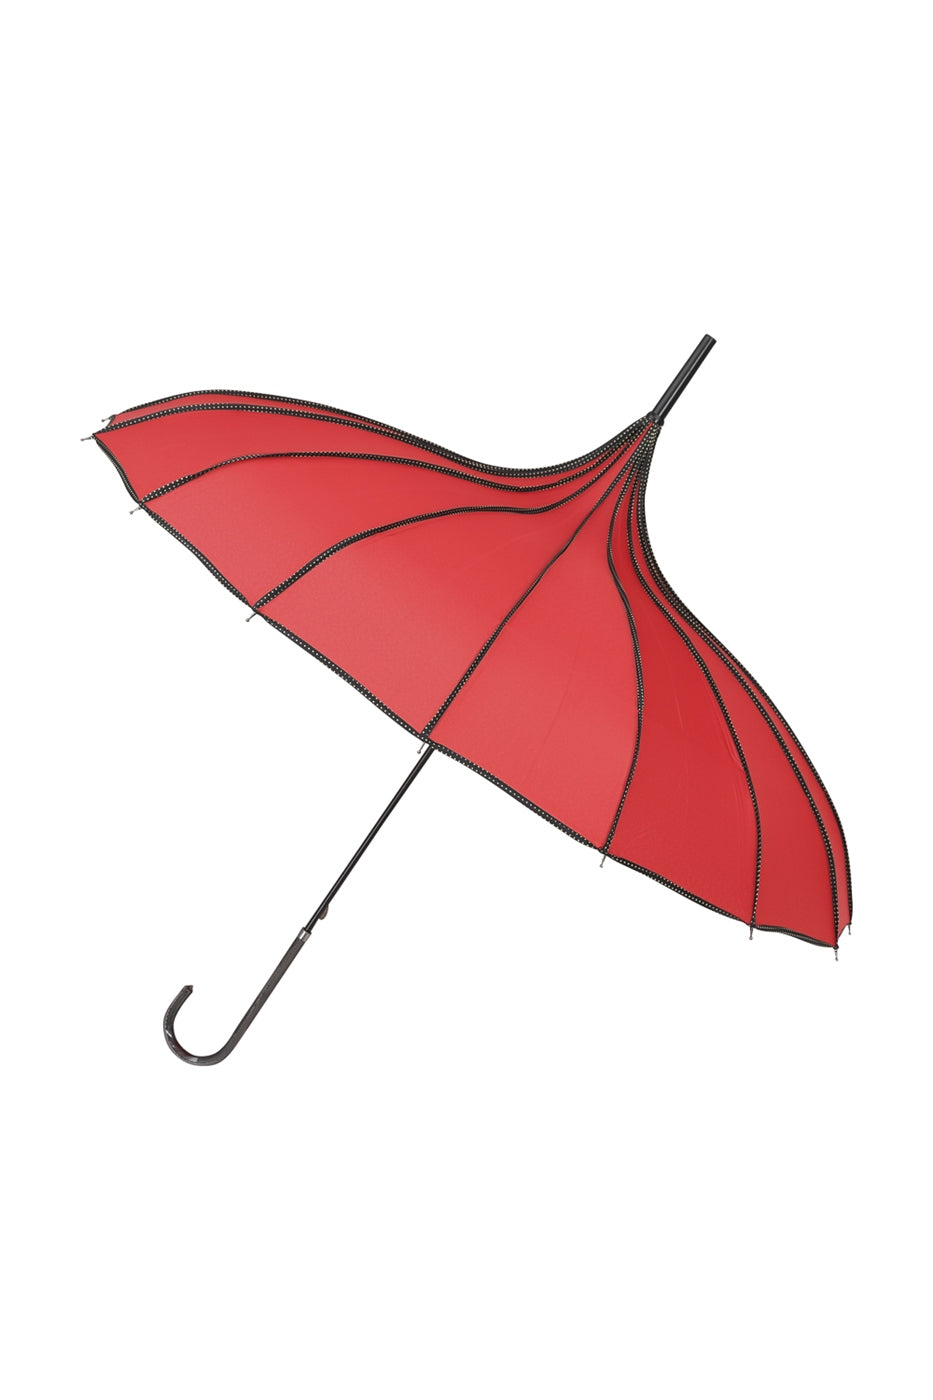 Everly Red and Black Pagoda Umbrella